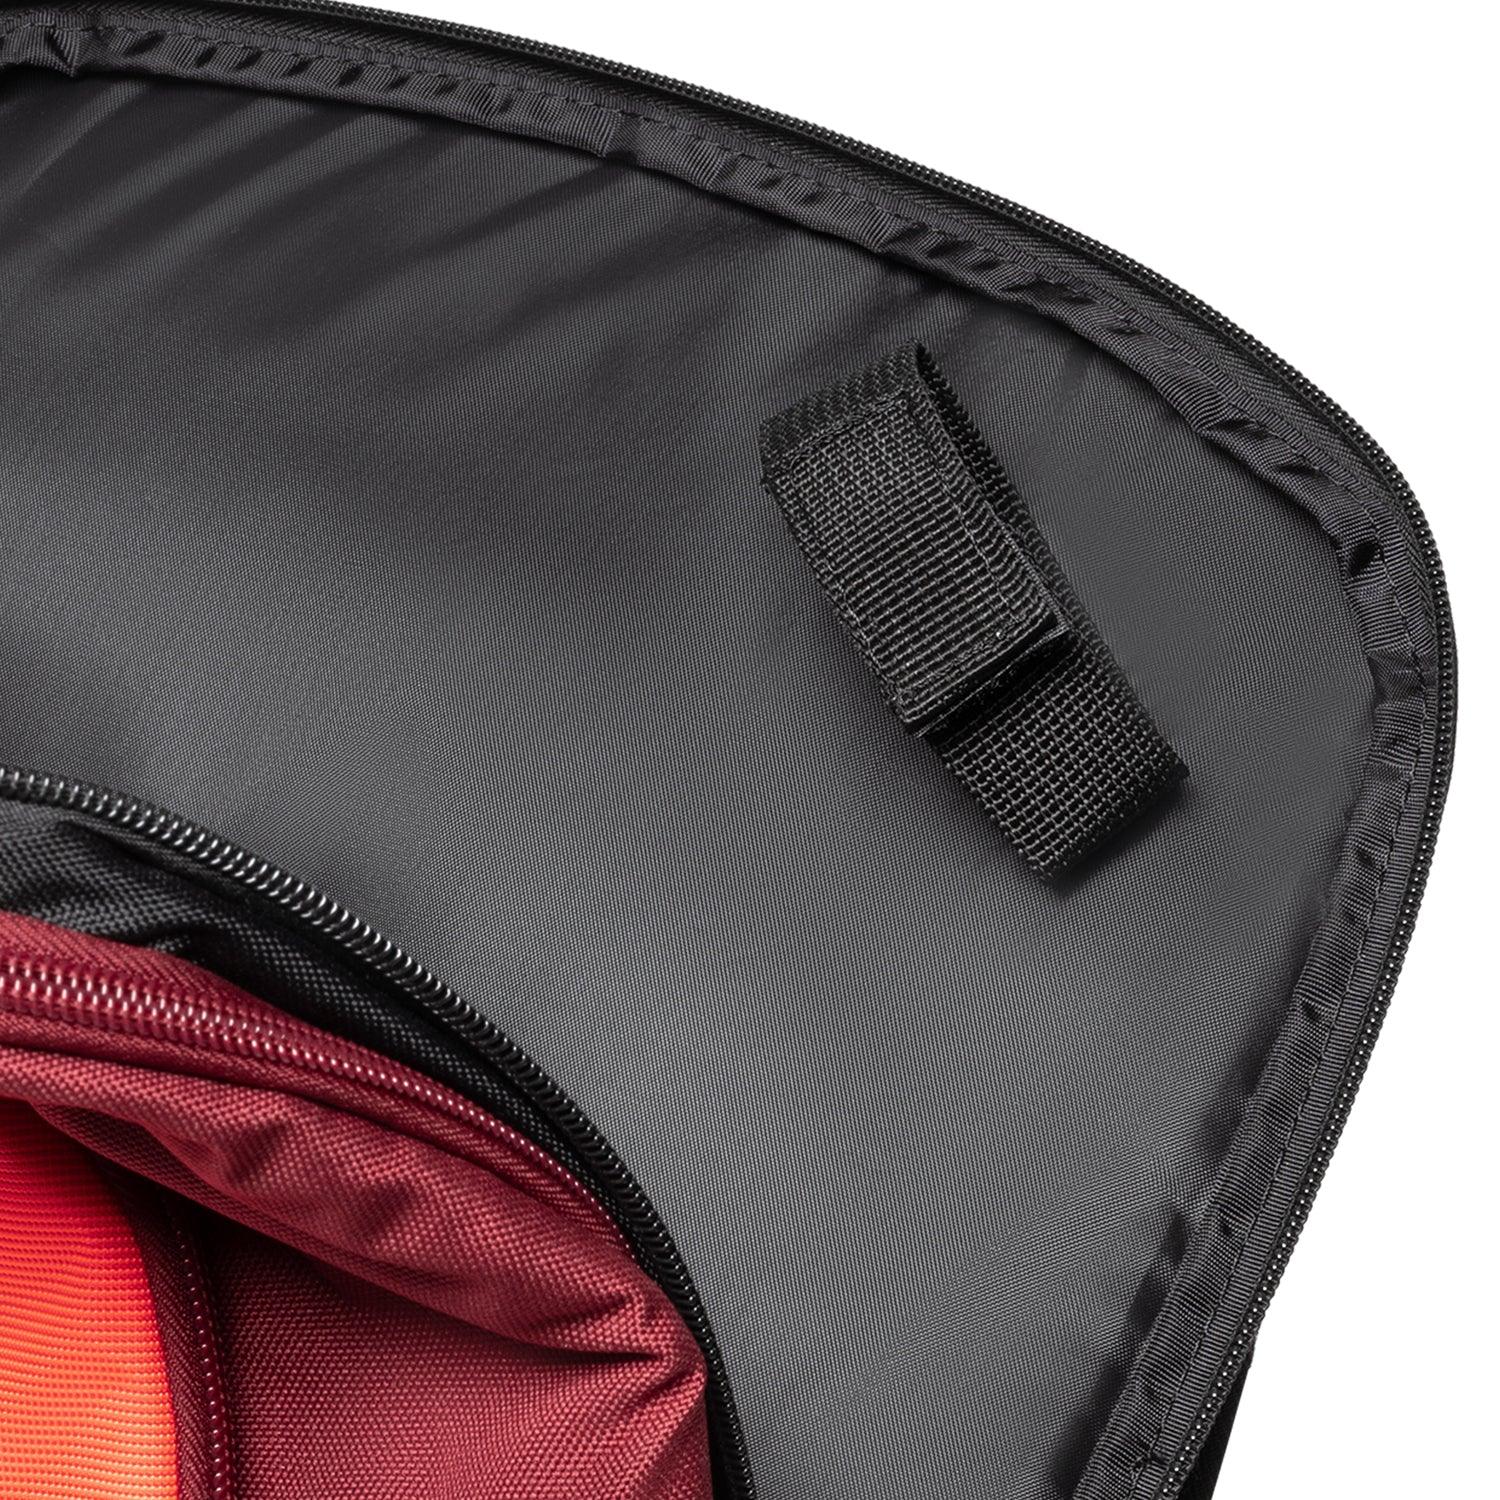 CX Performance Backpack Black/Red - 2024 - Bassline Retail